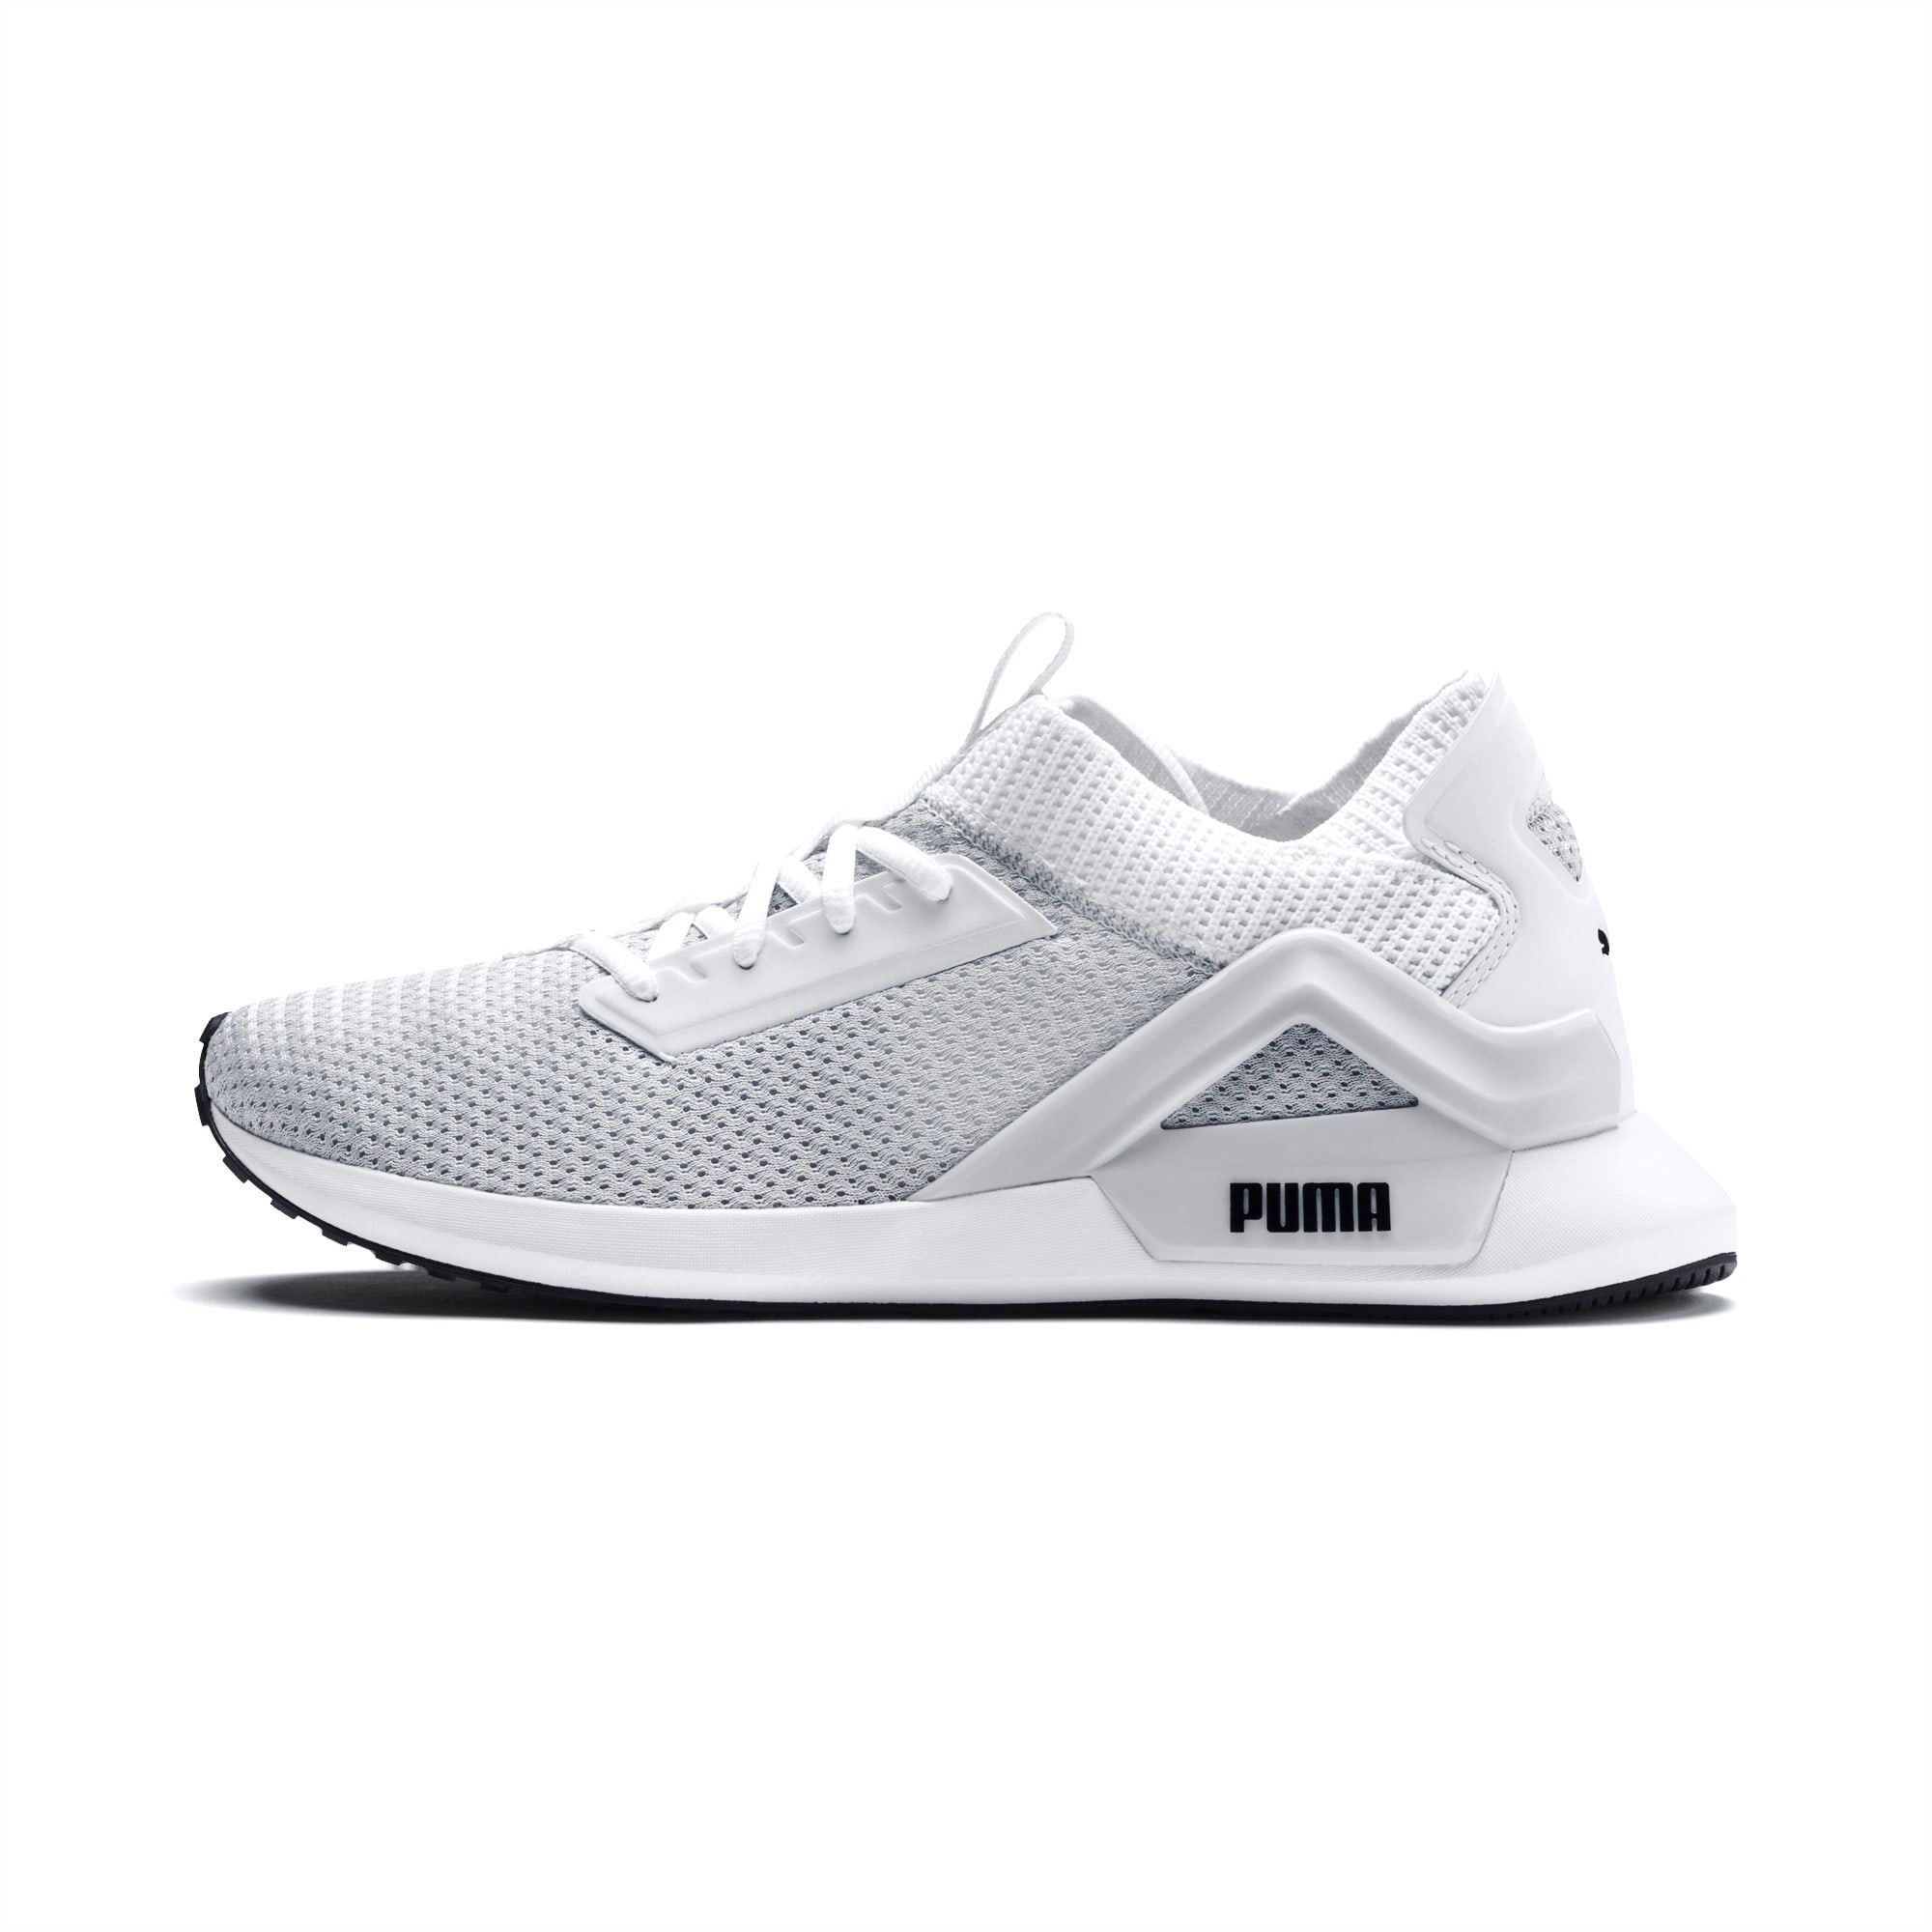 puma men's rogue running shoes